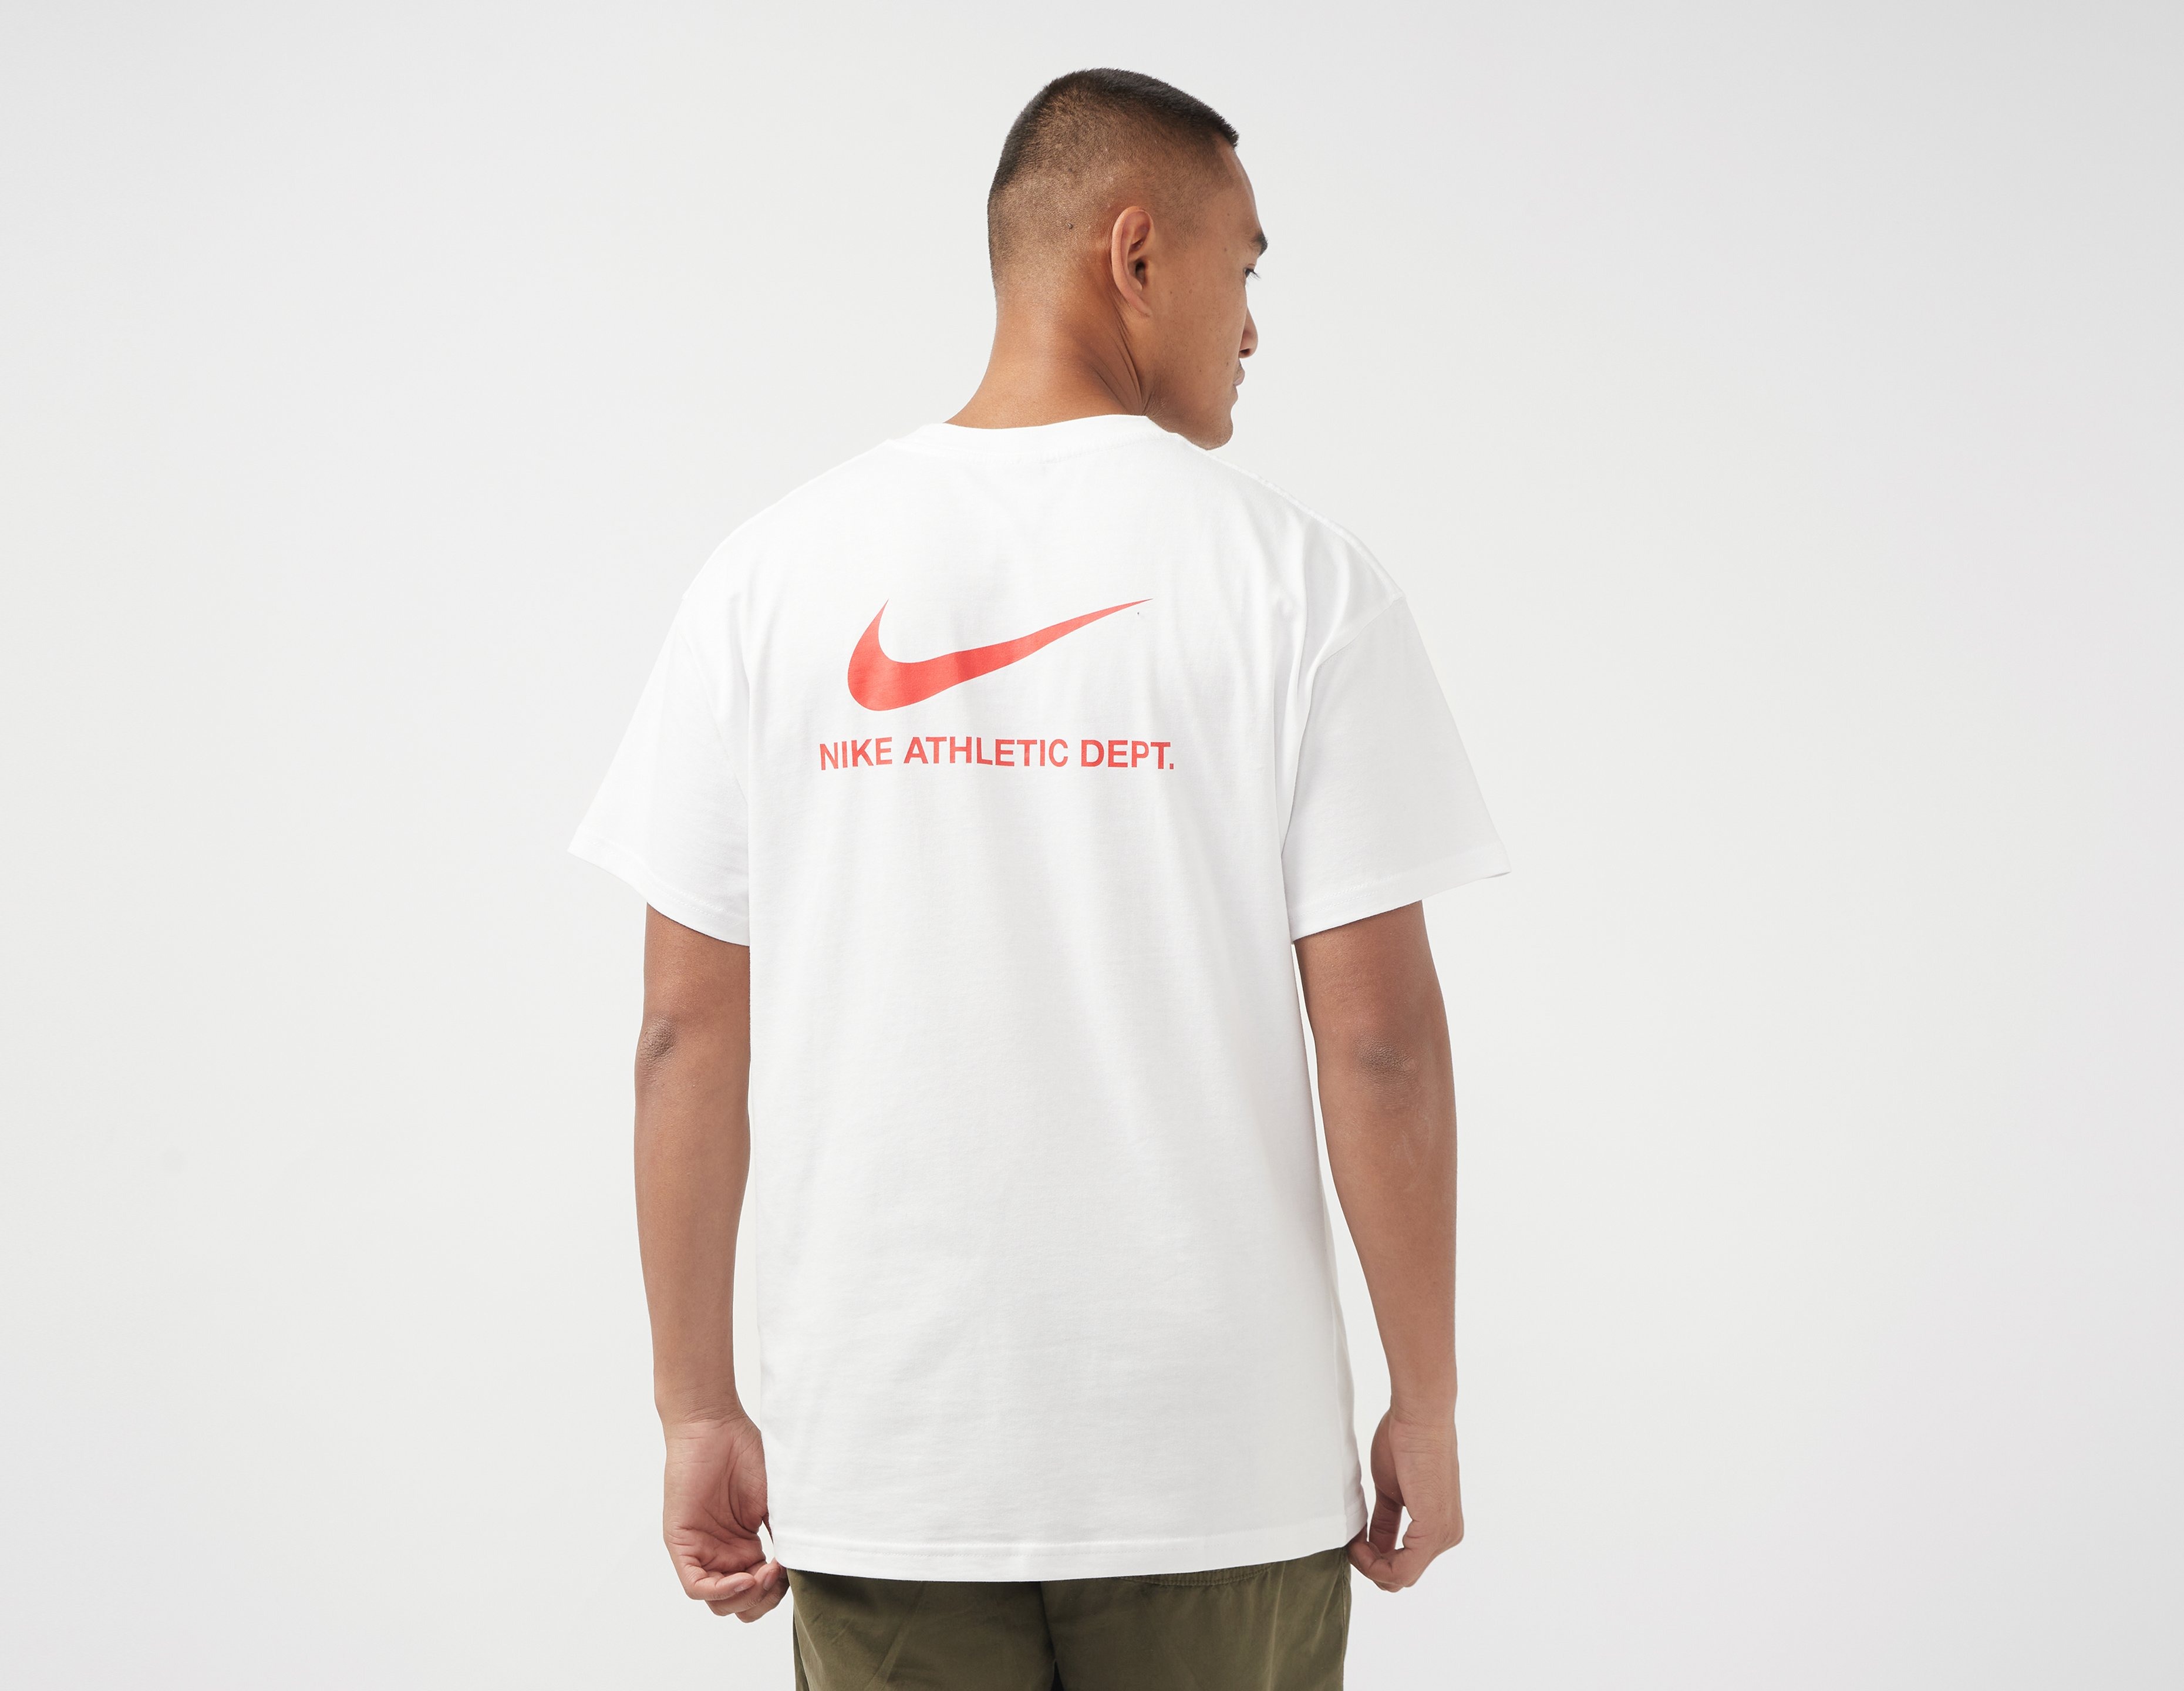 air max 270 sepia stone  Shirt - White Nike Sportswear Graphic T -  Healthdesign?